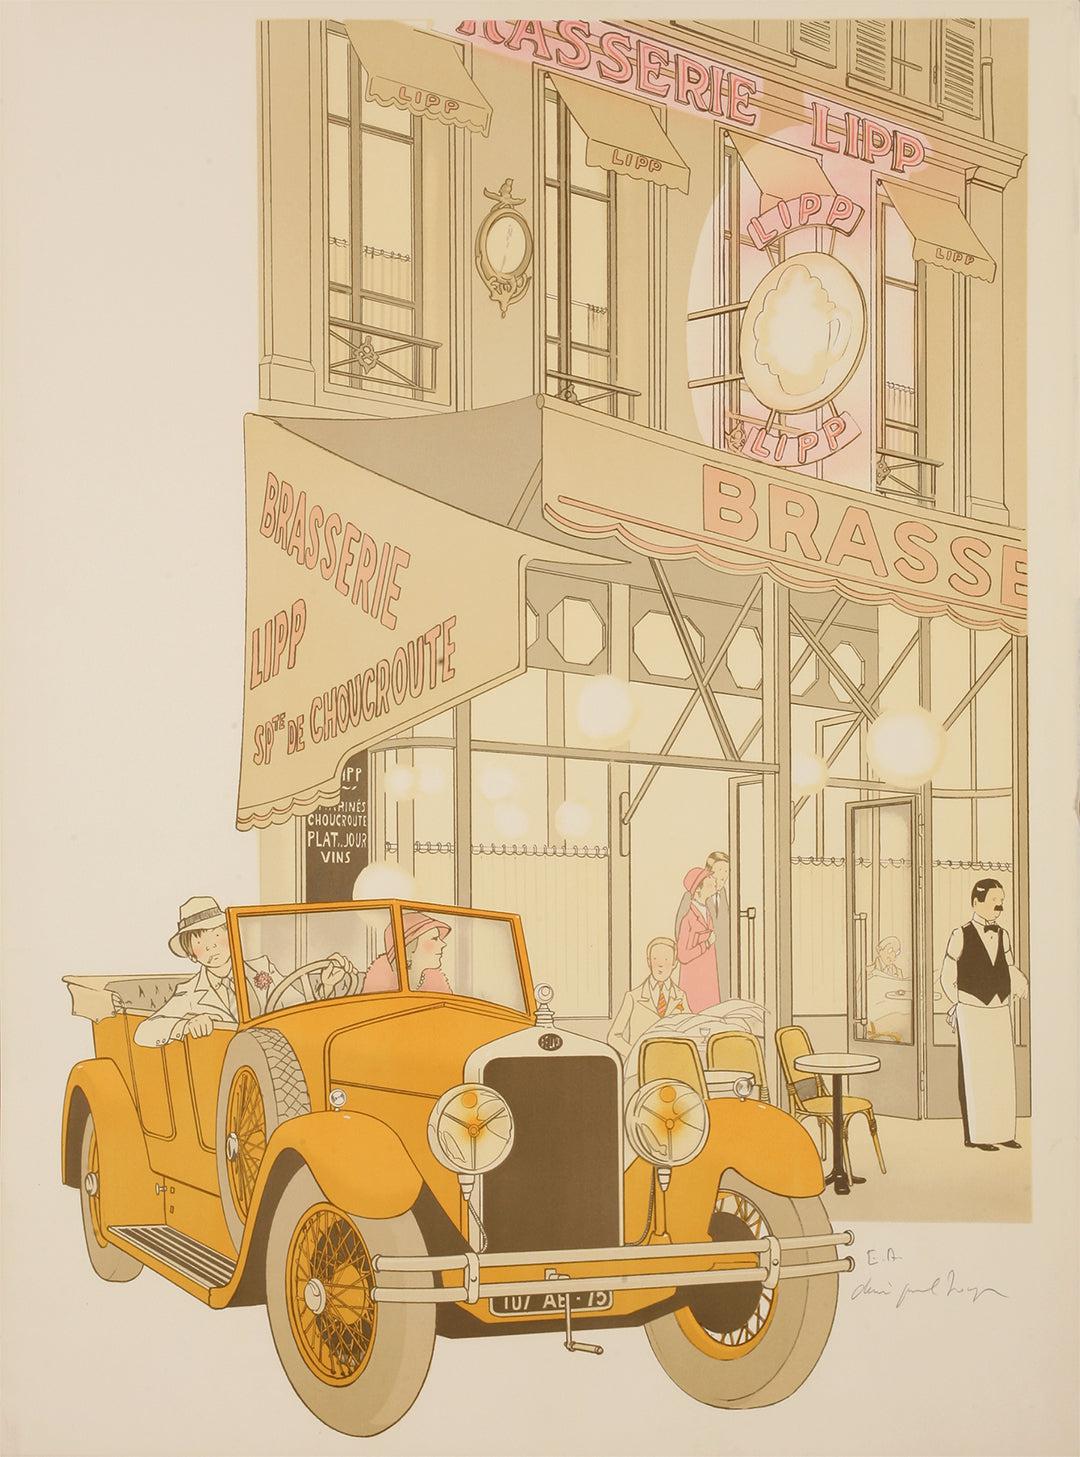 Original Vintage Brasserie Lipp French Restaurant Signed Print by Denis Paul Noyer c1979